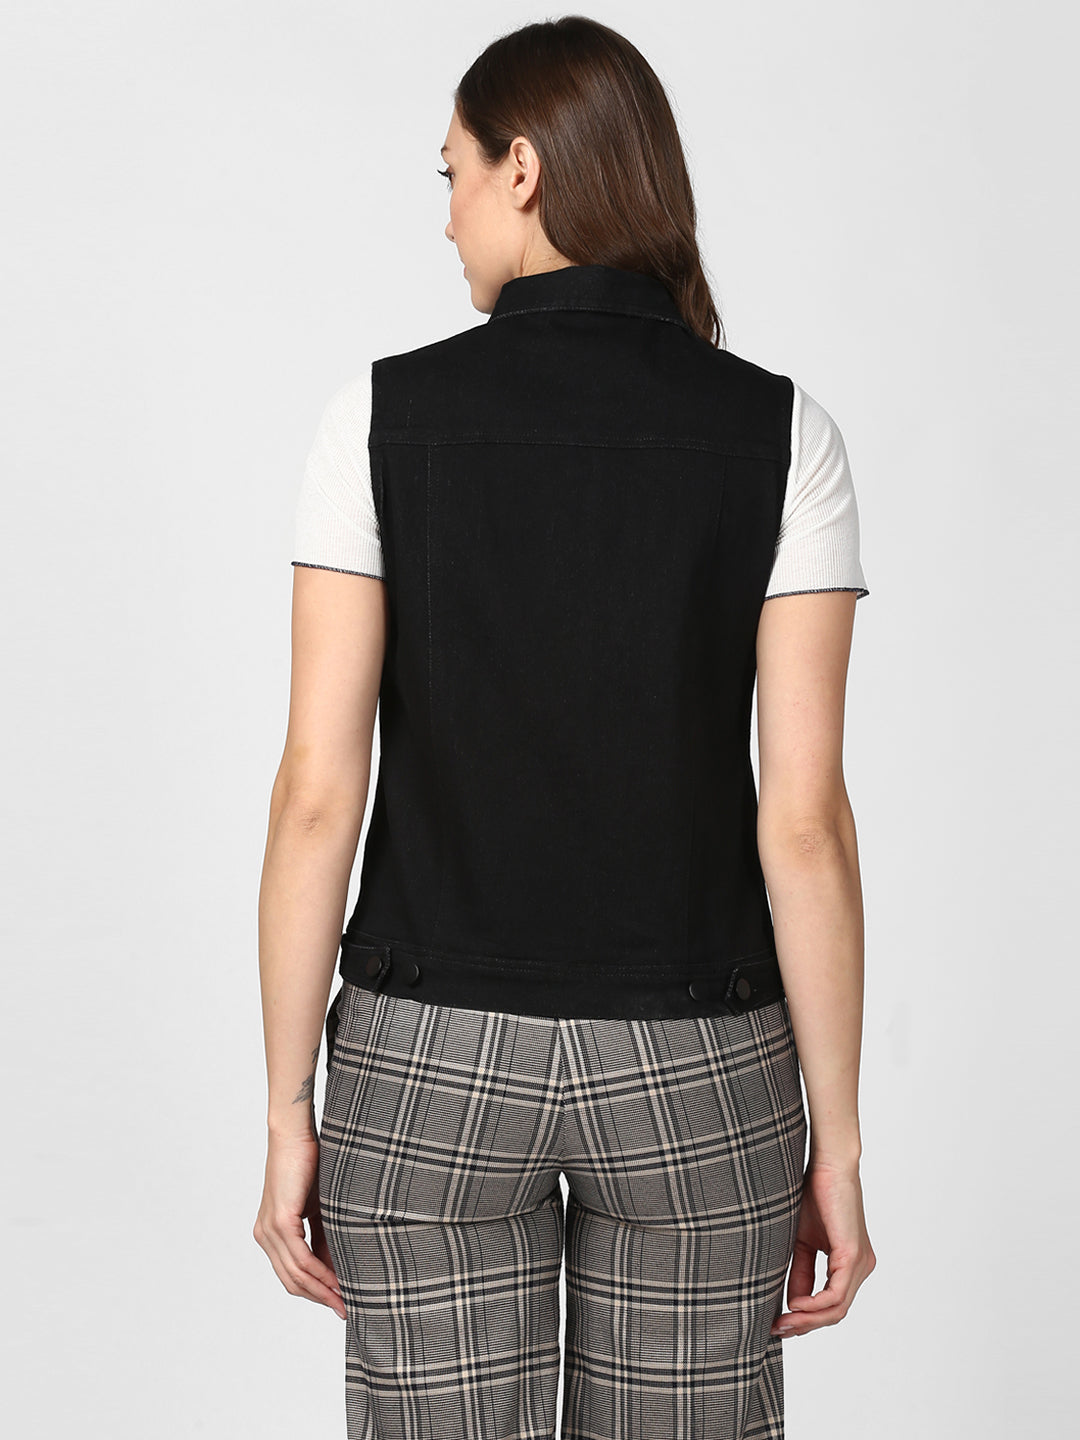 Women's Solid Black Denim Sleeveless Jacket